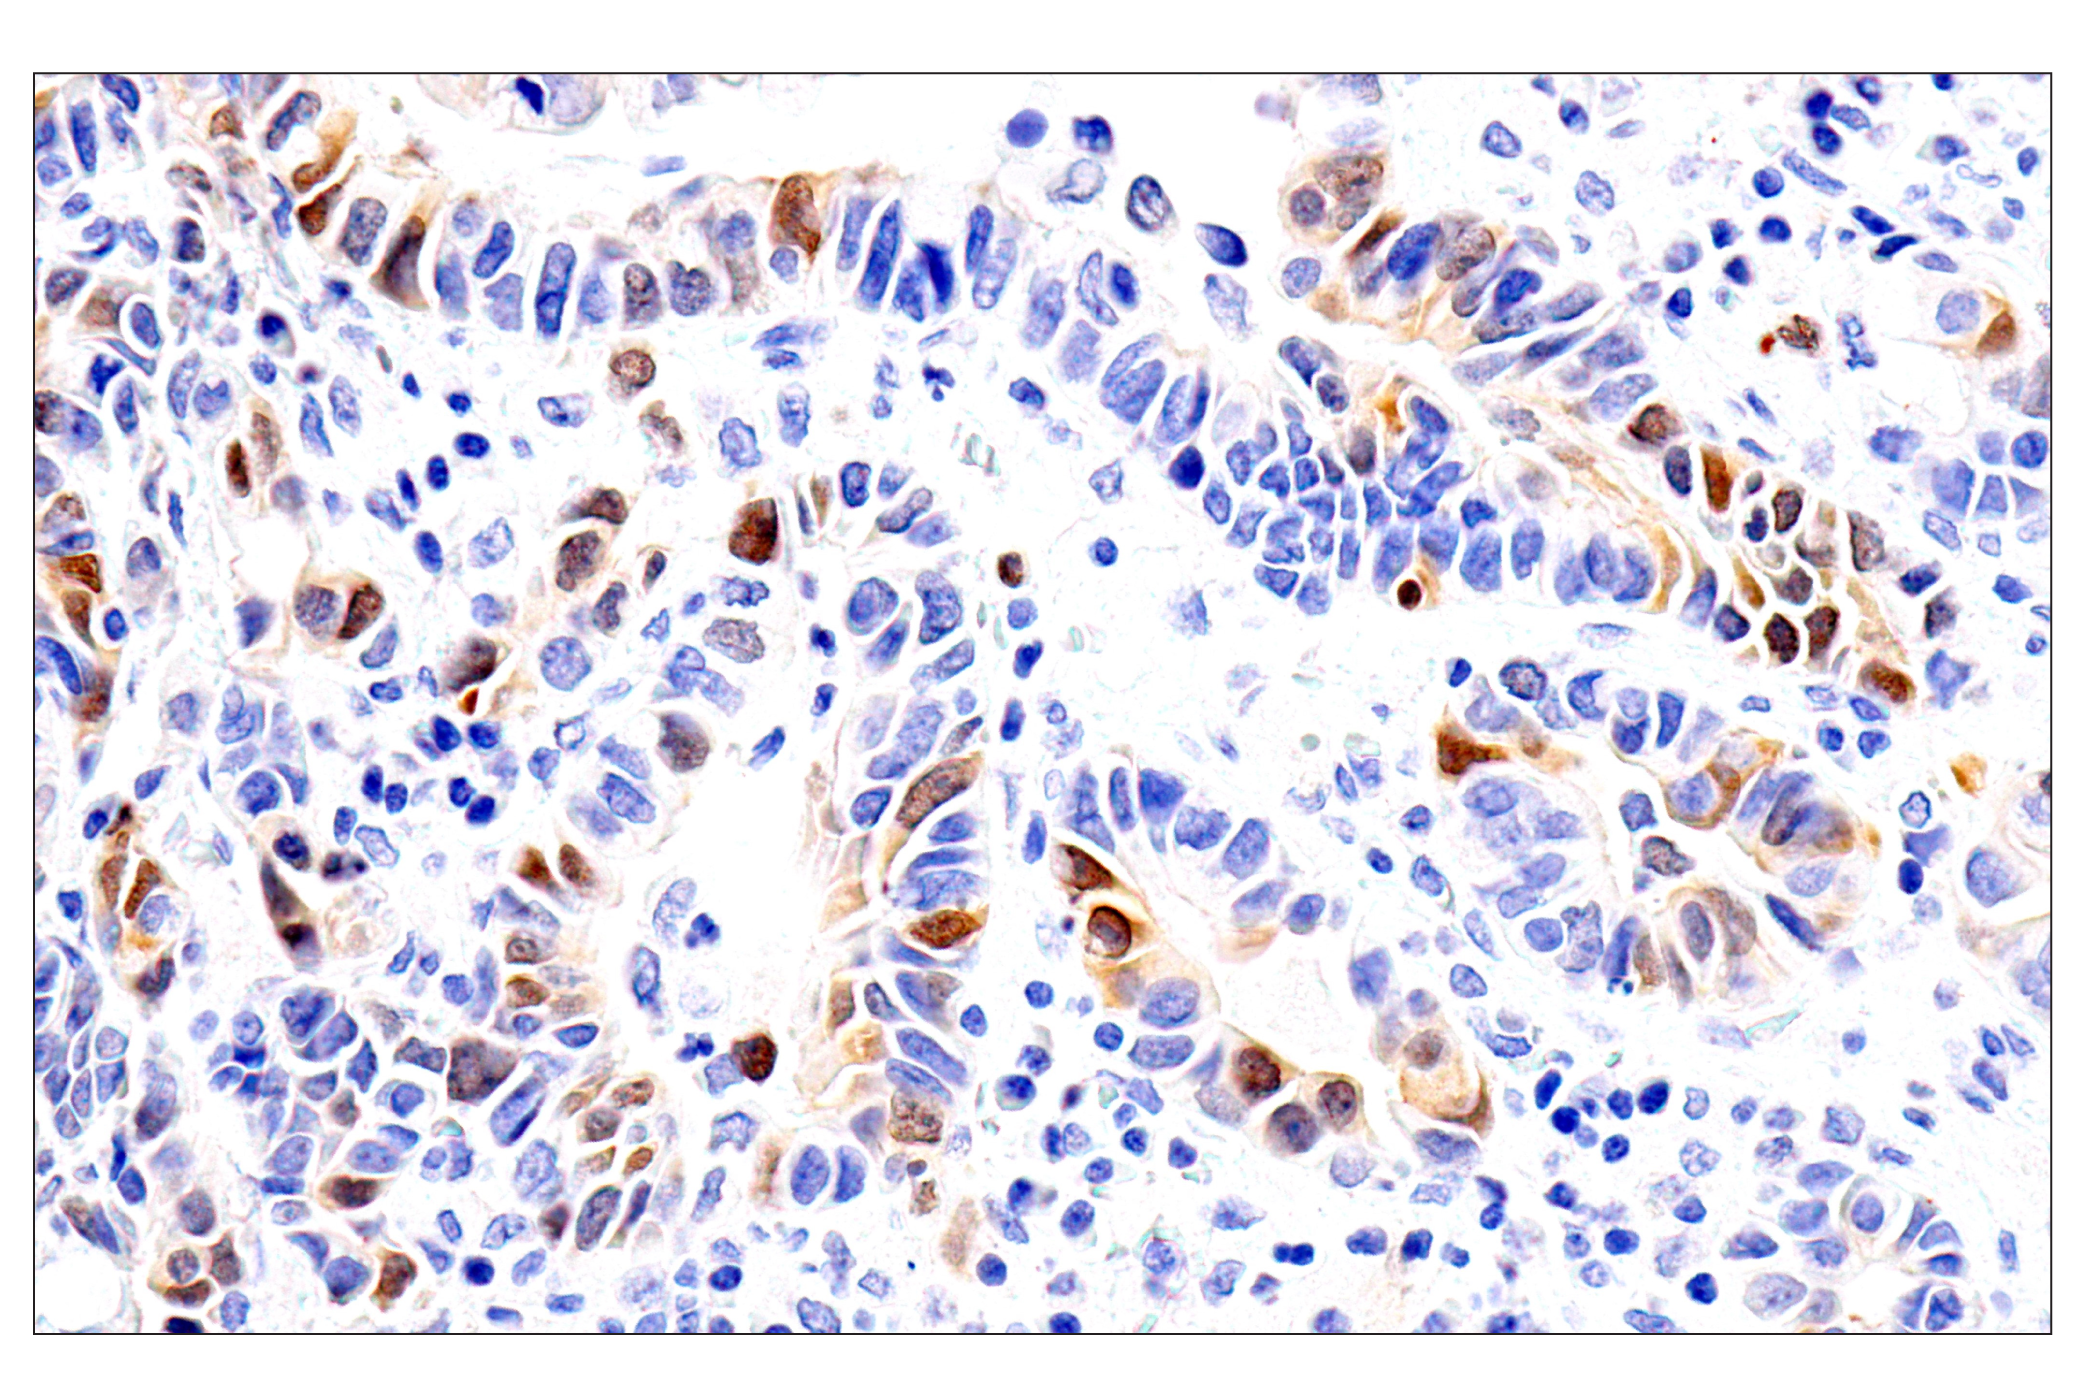  Image 10: PhosphoPlus® Chk1 (Ser317) Antibody Duet